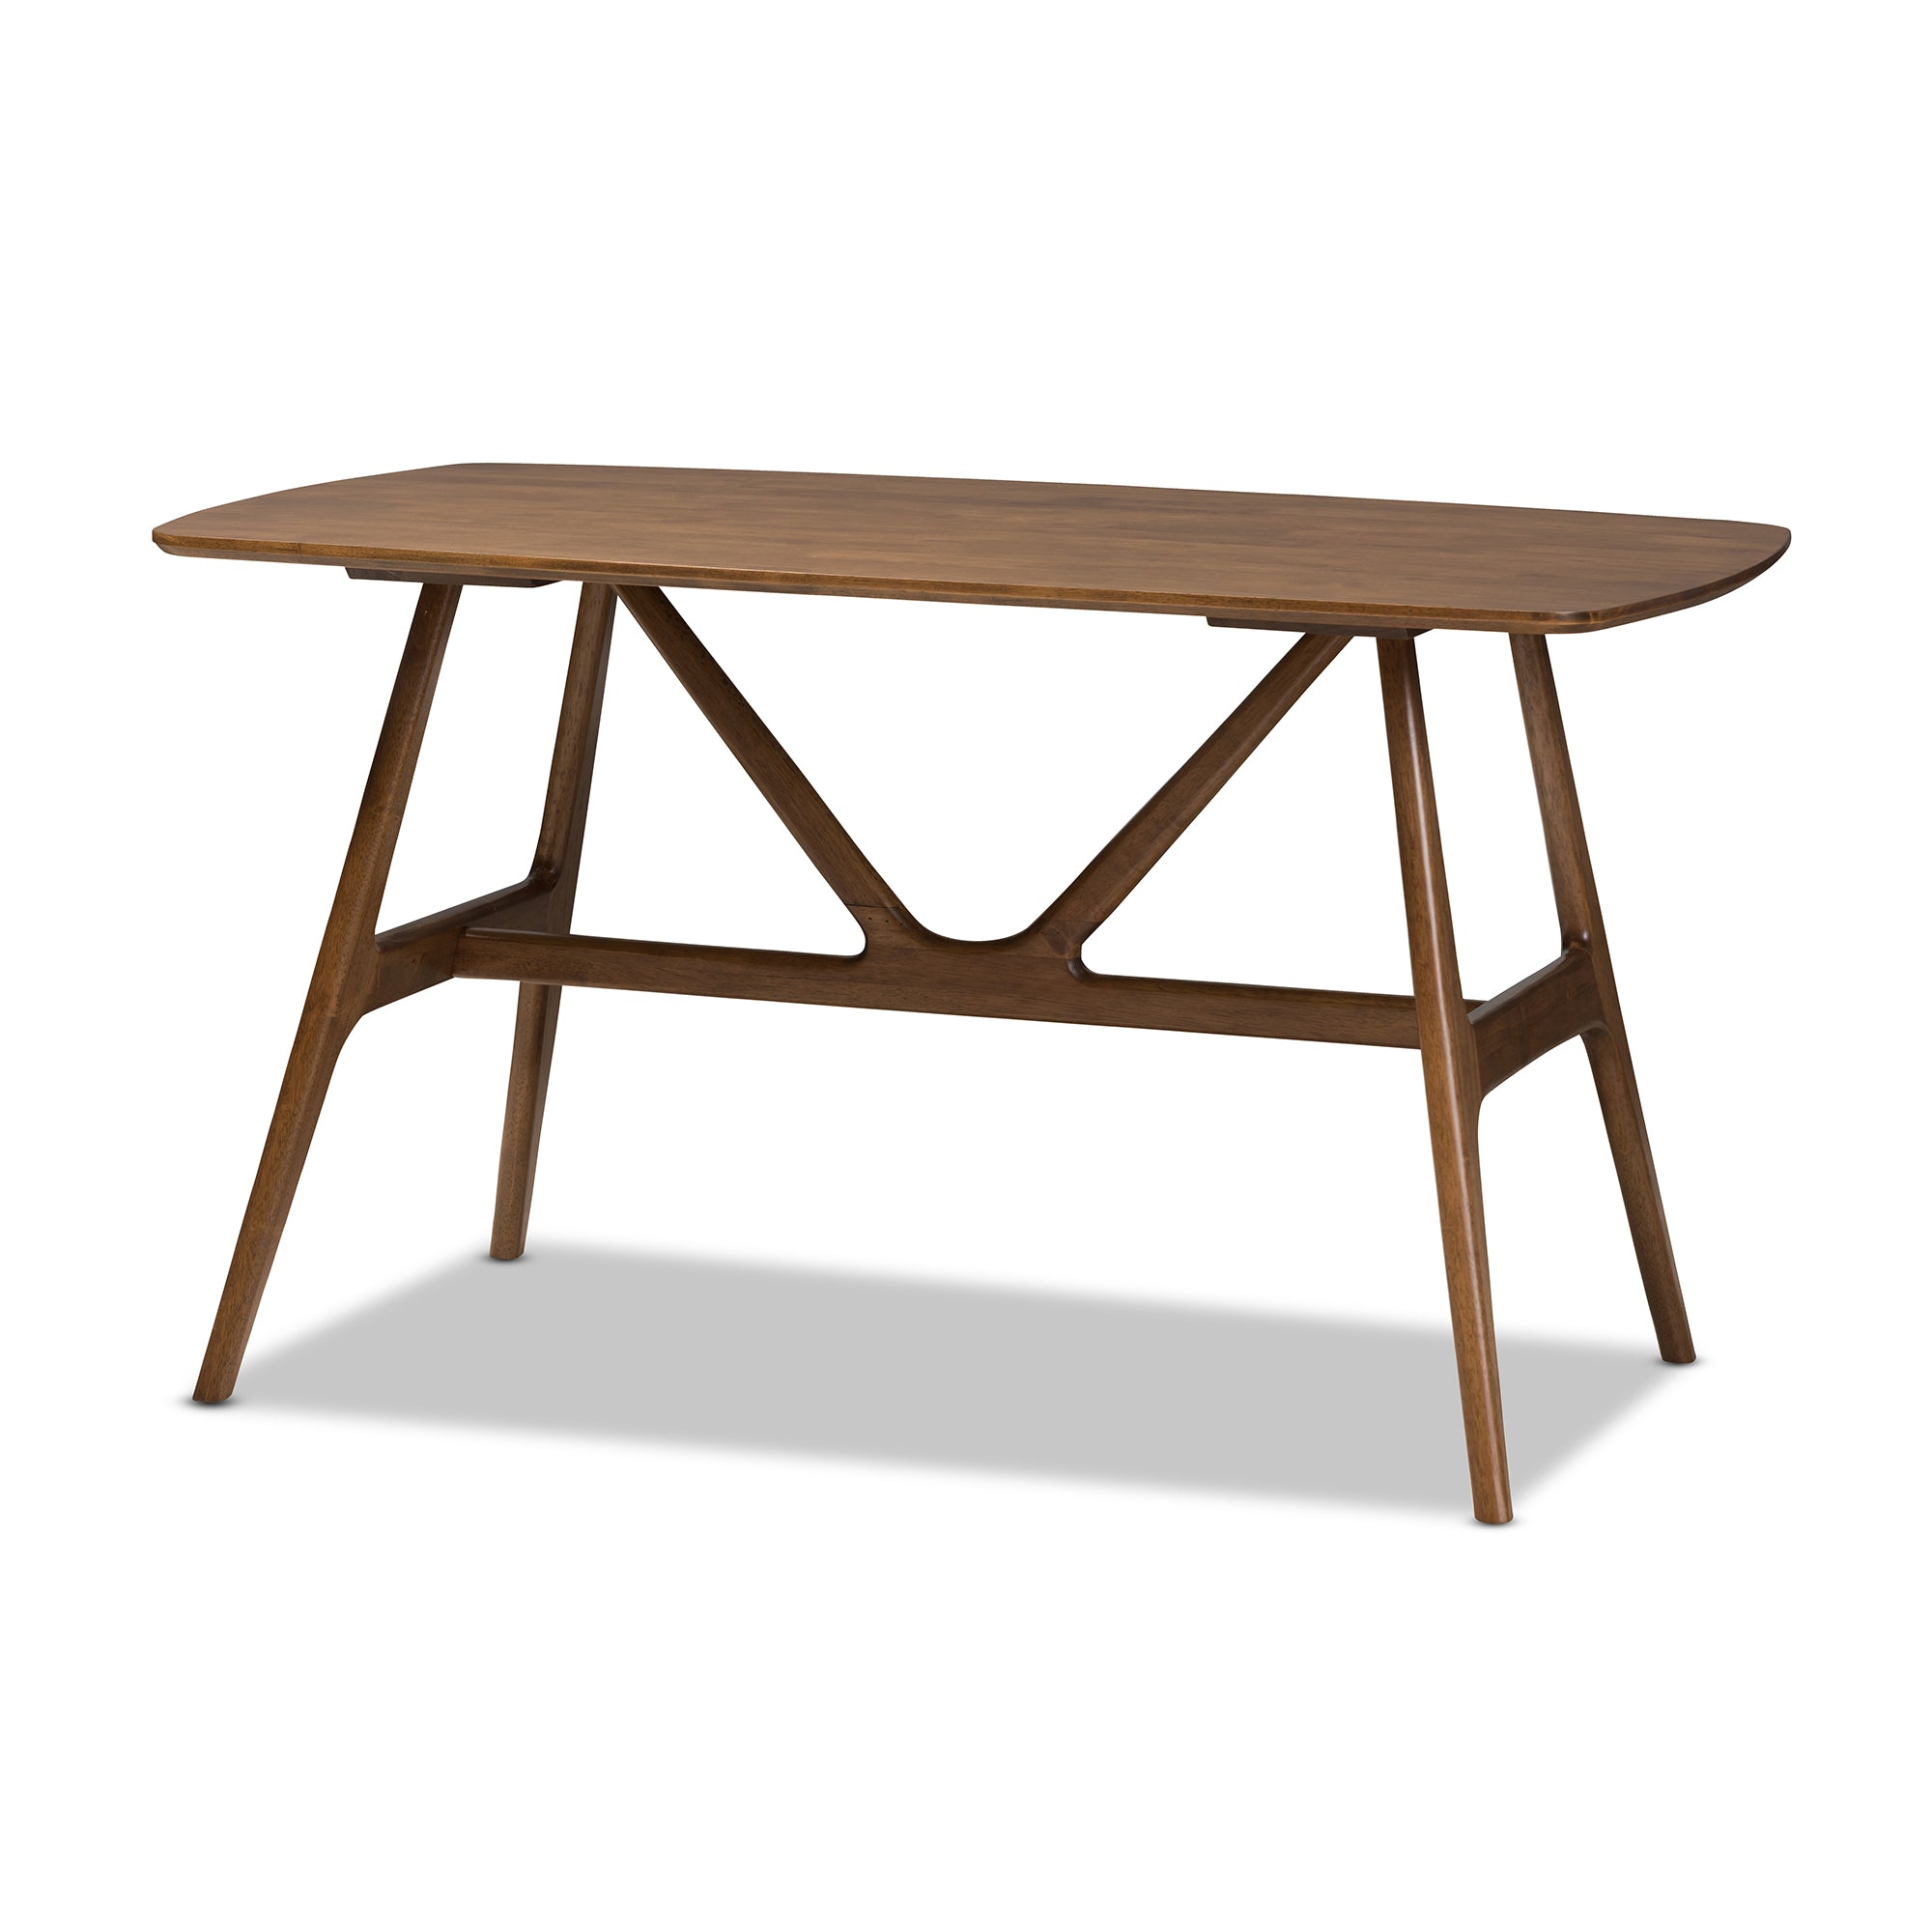 Wyatt Mid-Century Table & Dining Chairs-Dining Set-Baxton Studio - WI-Wall2Wall Furnishings